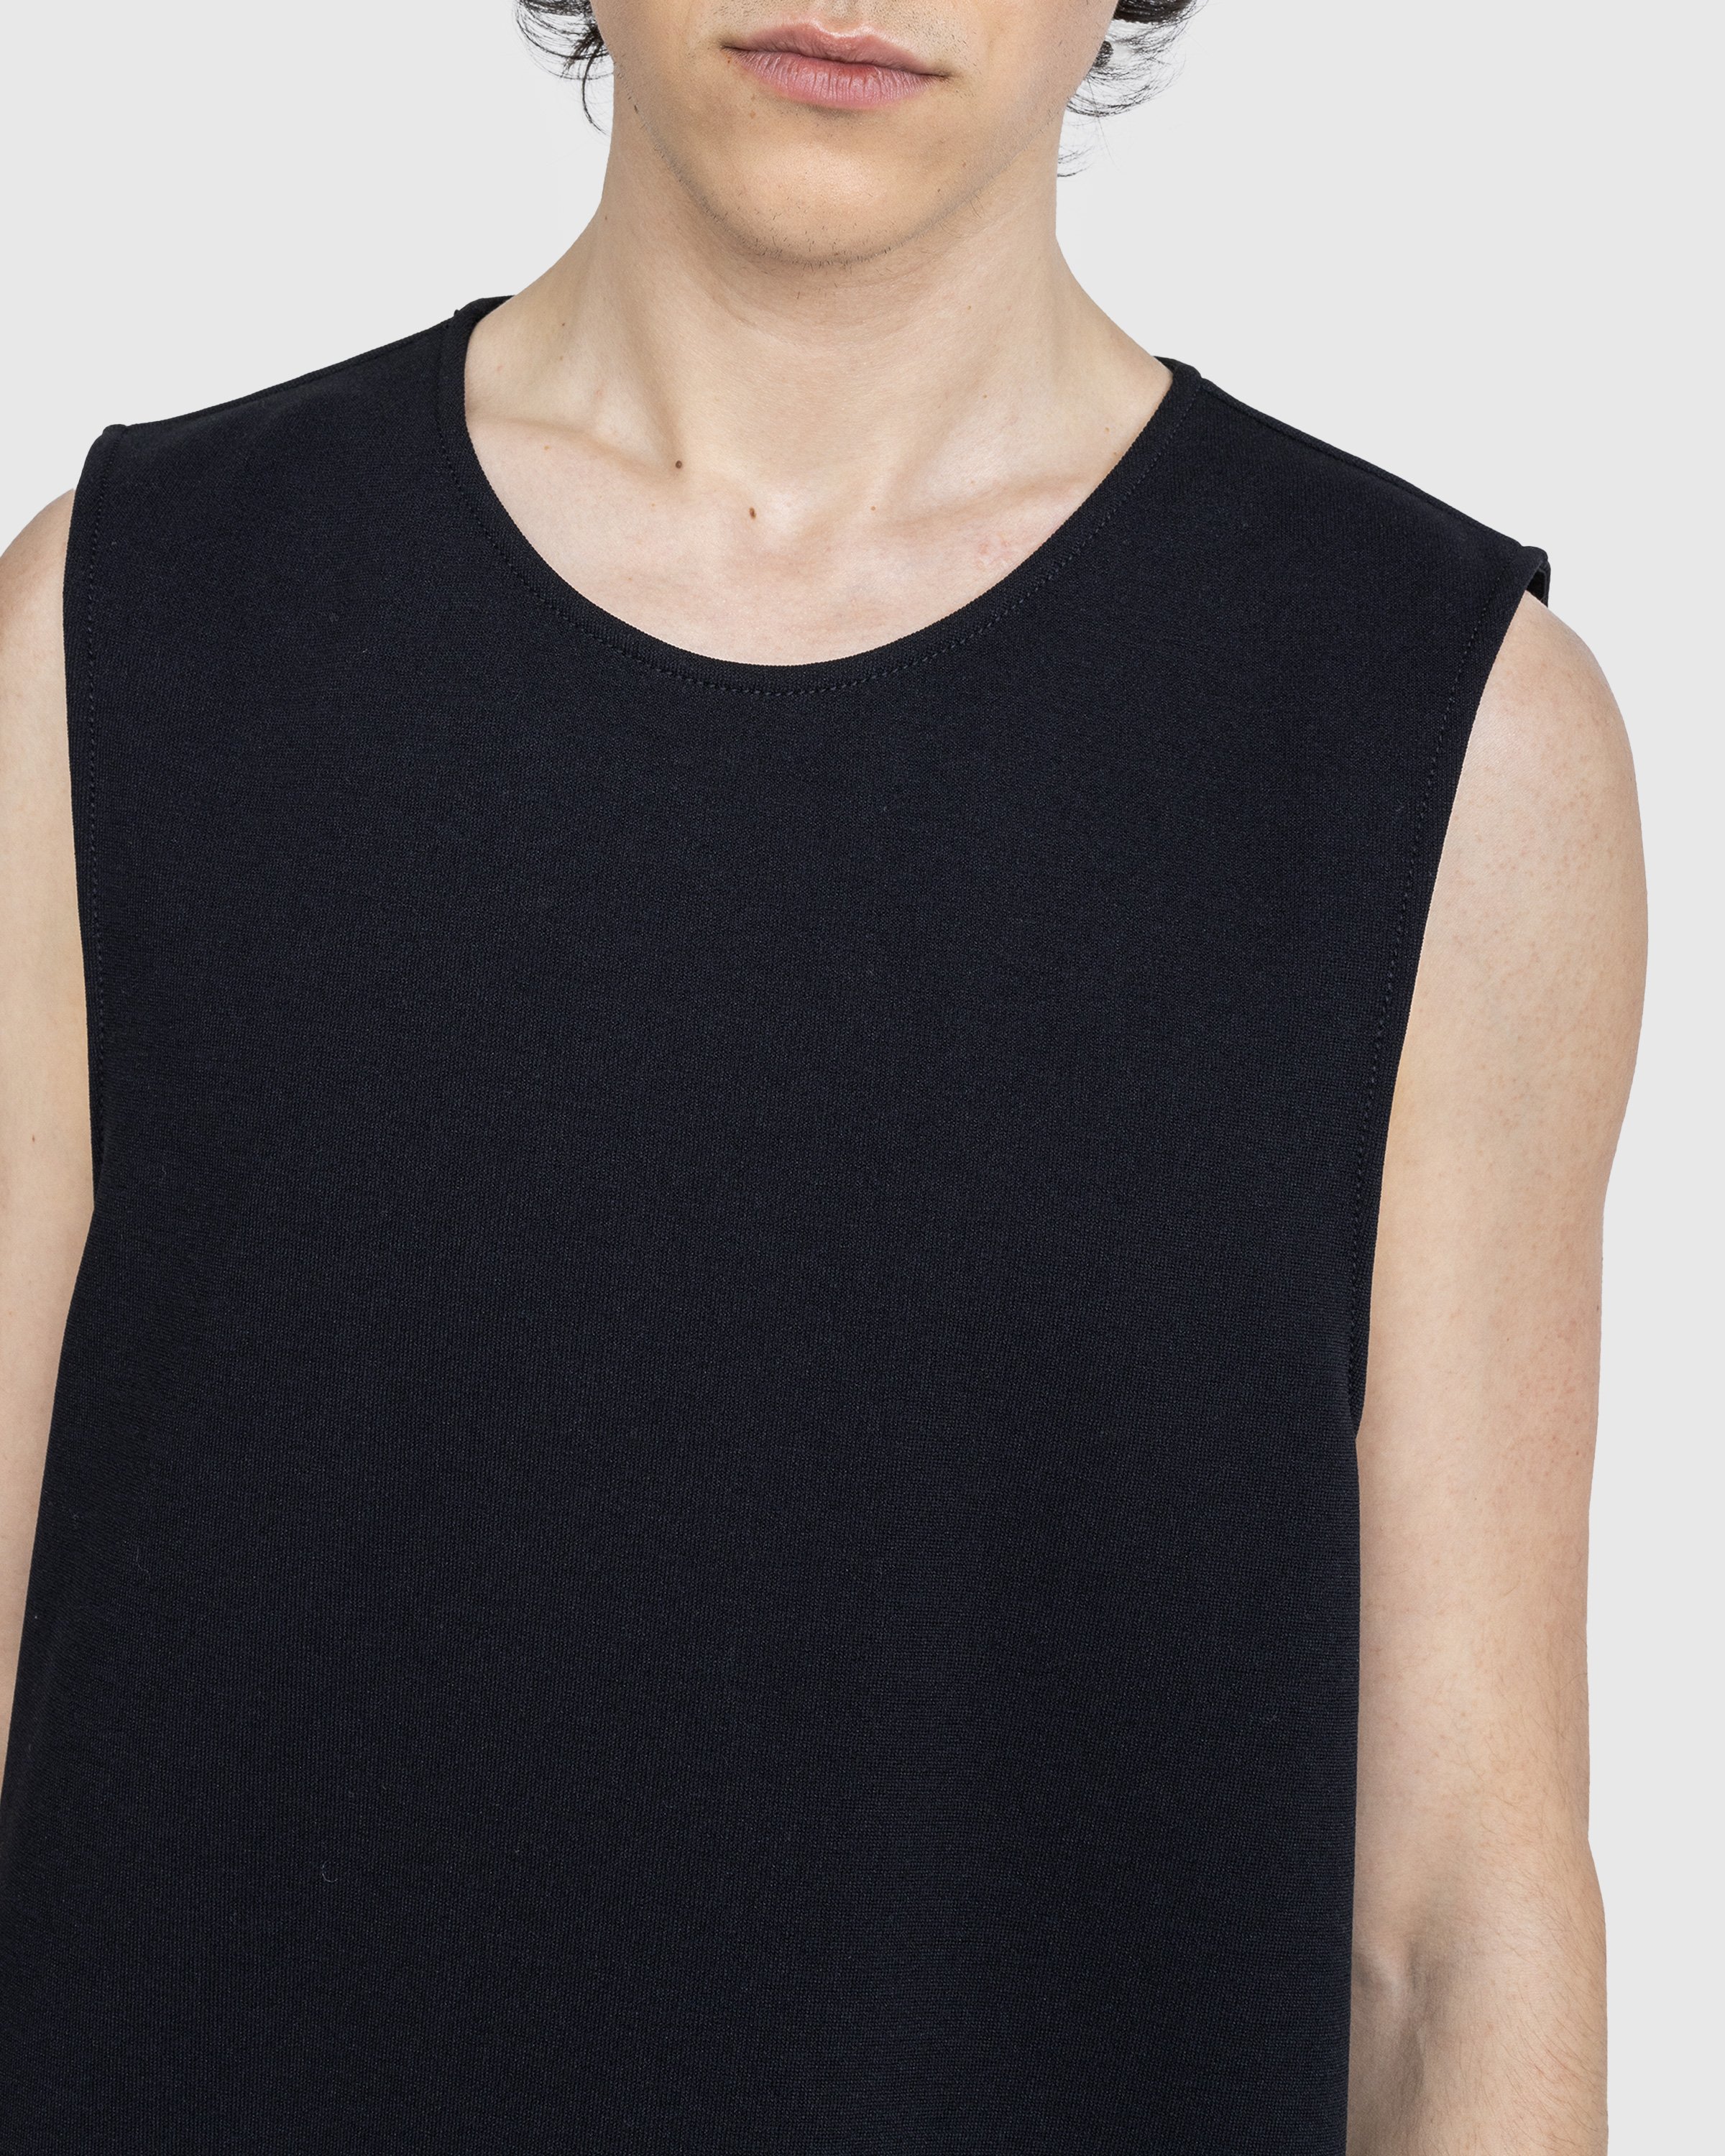 Jil Sander - Tank Top - Clothing - Black - Image 4